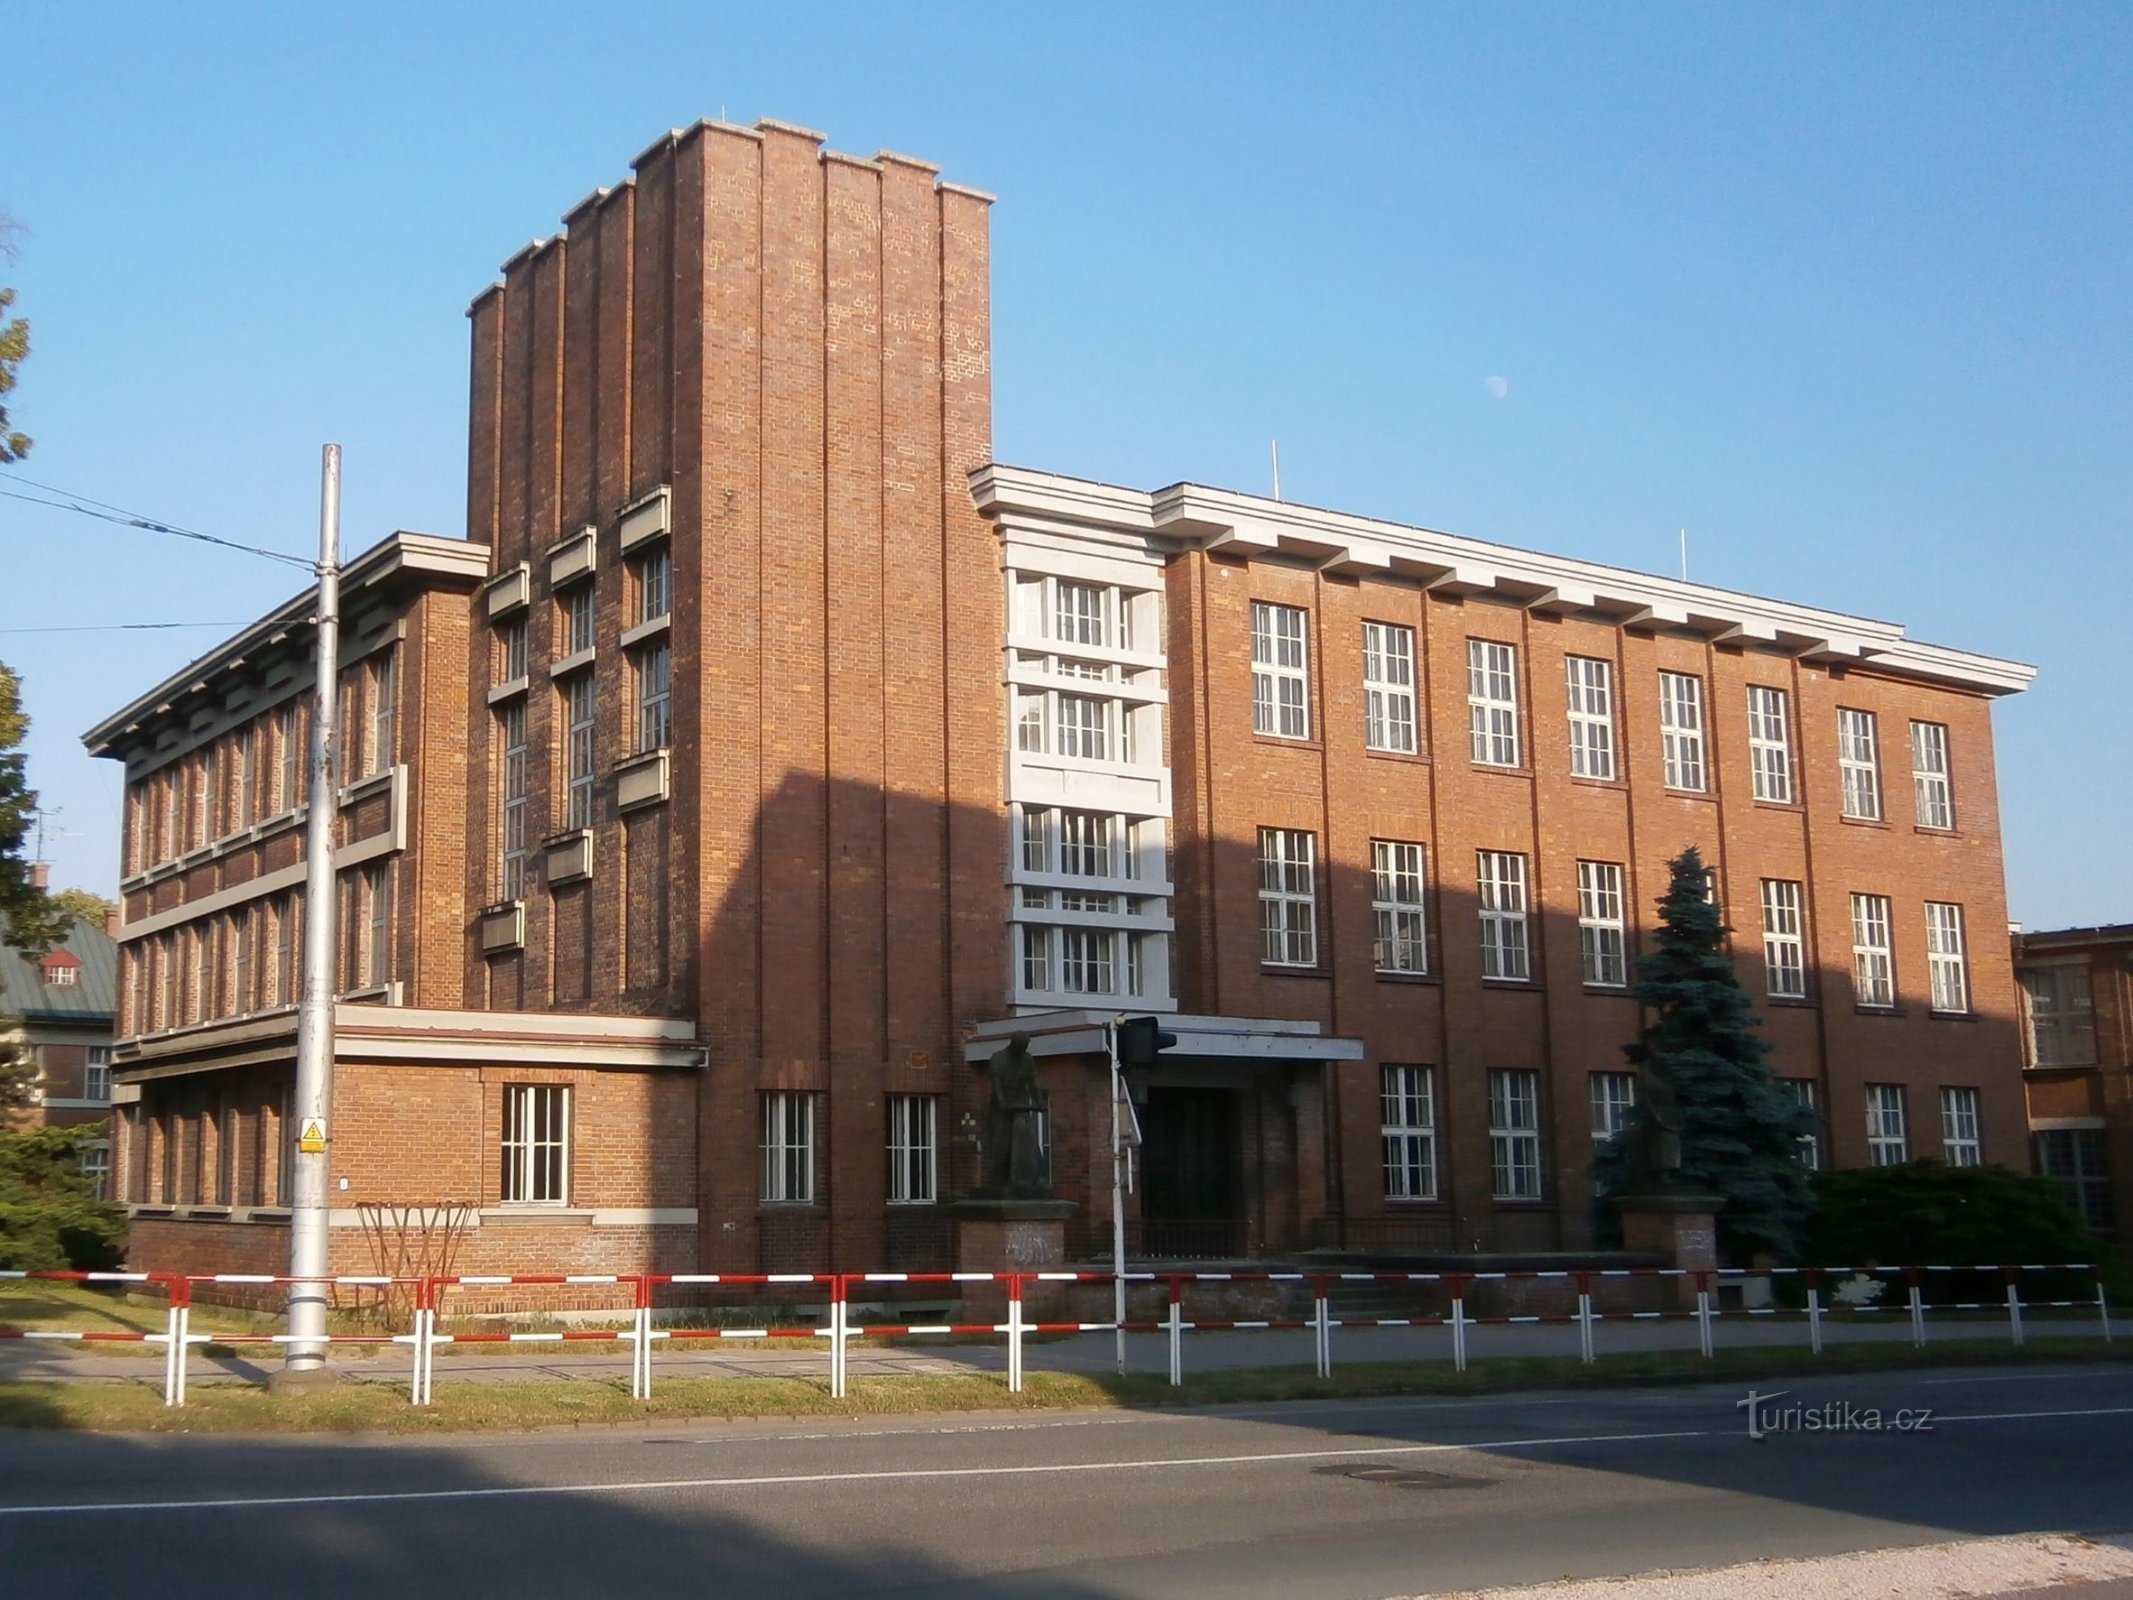 Nekdanja usnjarska šola (Hradec Králové, 19.6.2013)